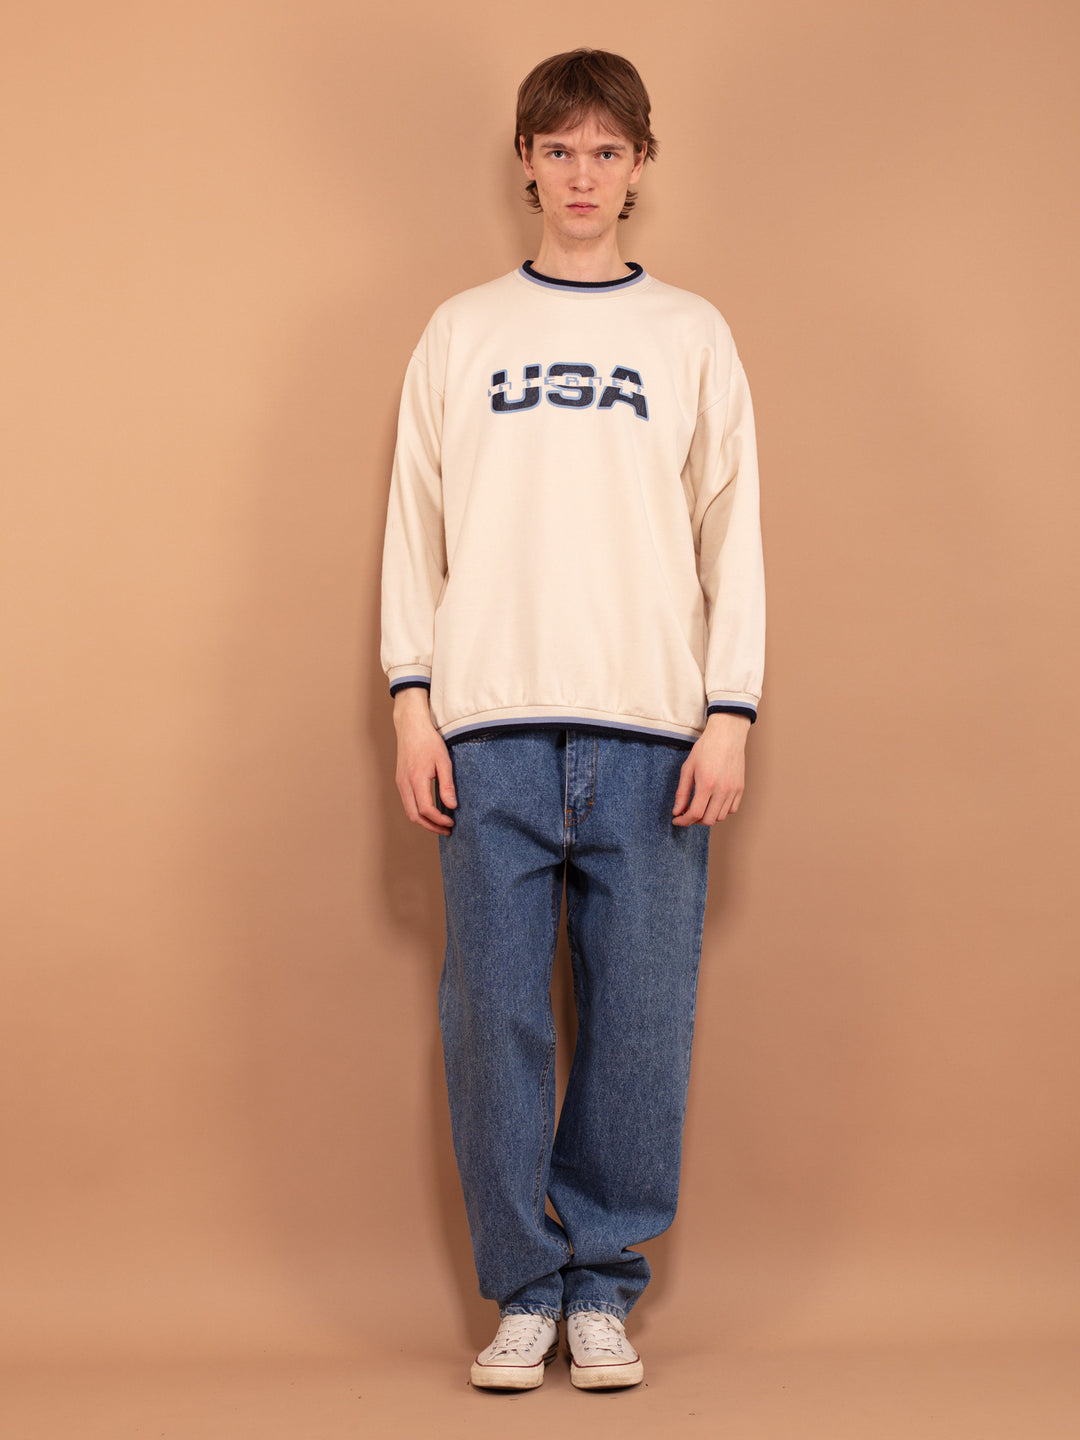 Vintage 90's Men Sweatshirt with USA print